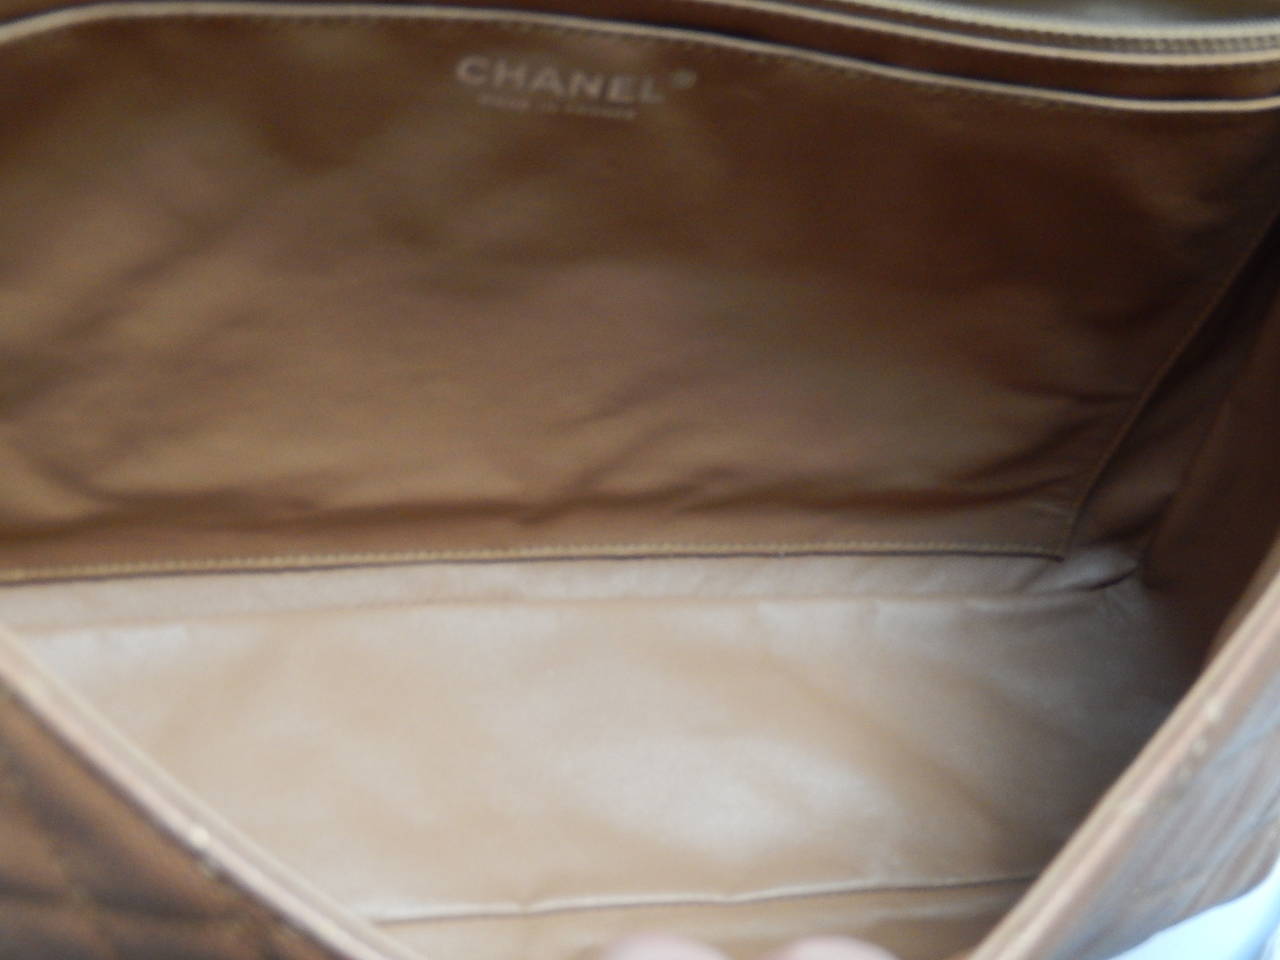 2009 Chanel Soft Caviar Maxi Single Flap Bag in Cafe Au Lait Silver Hardware For Sale 2